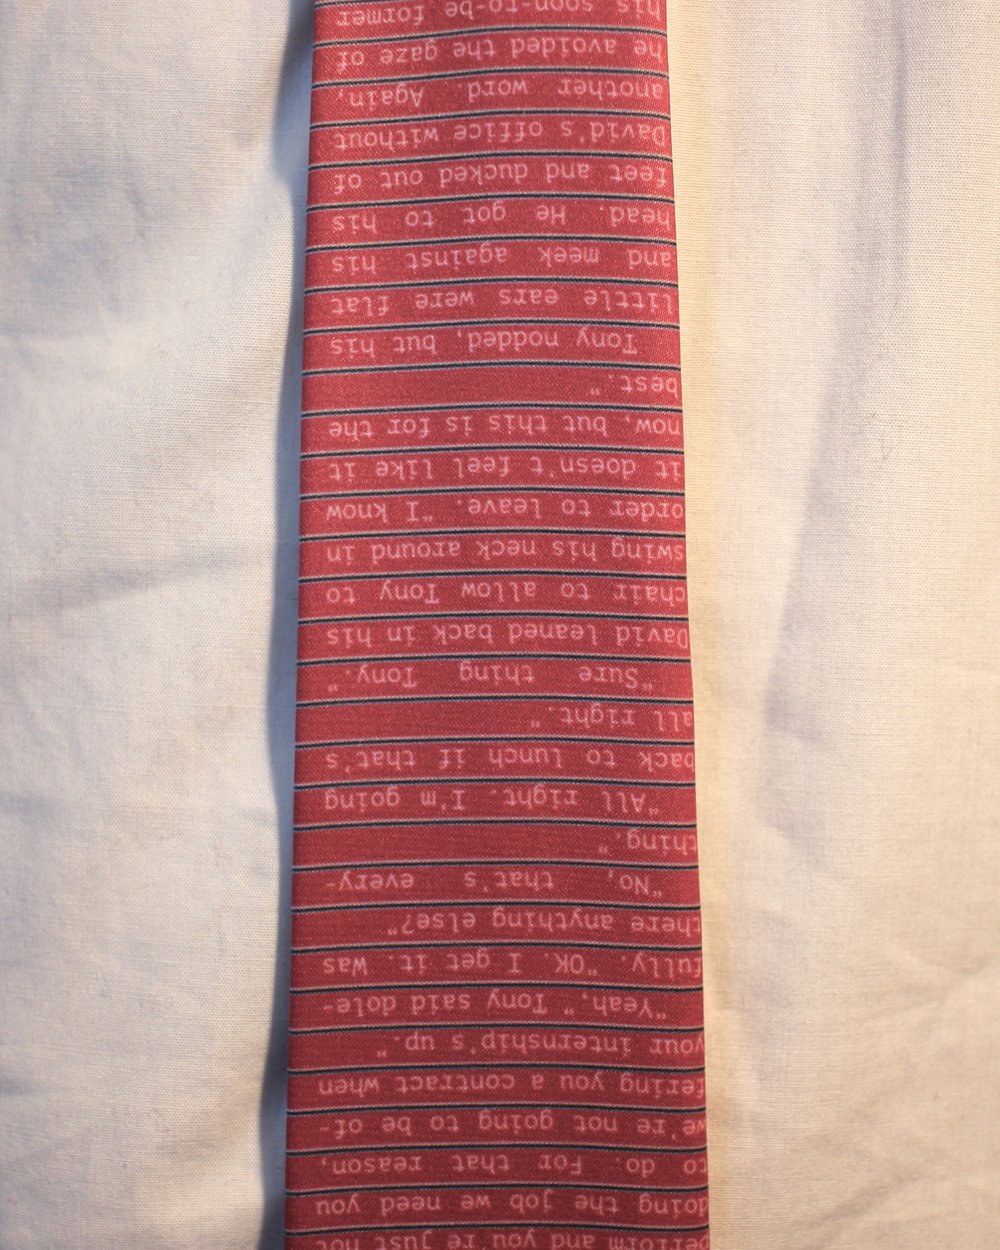 Tie worn by idiot (3)